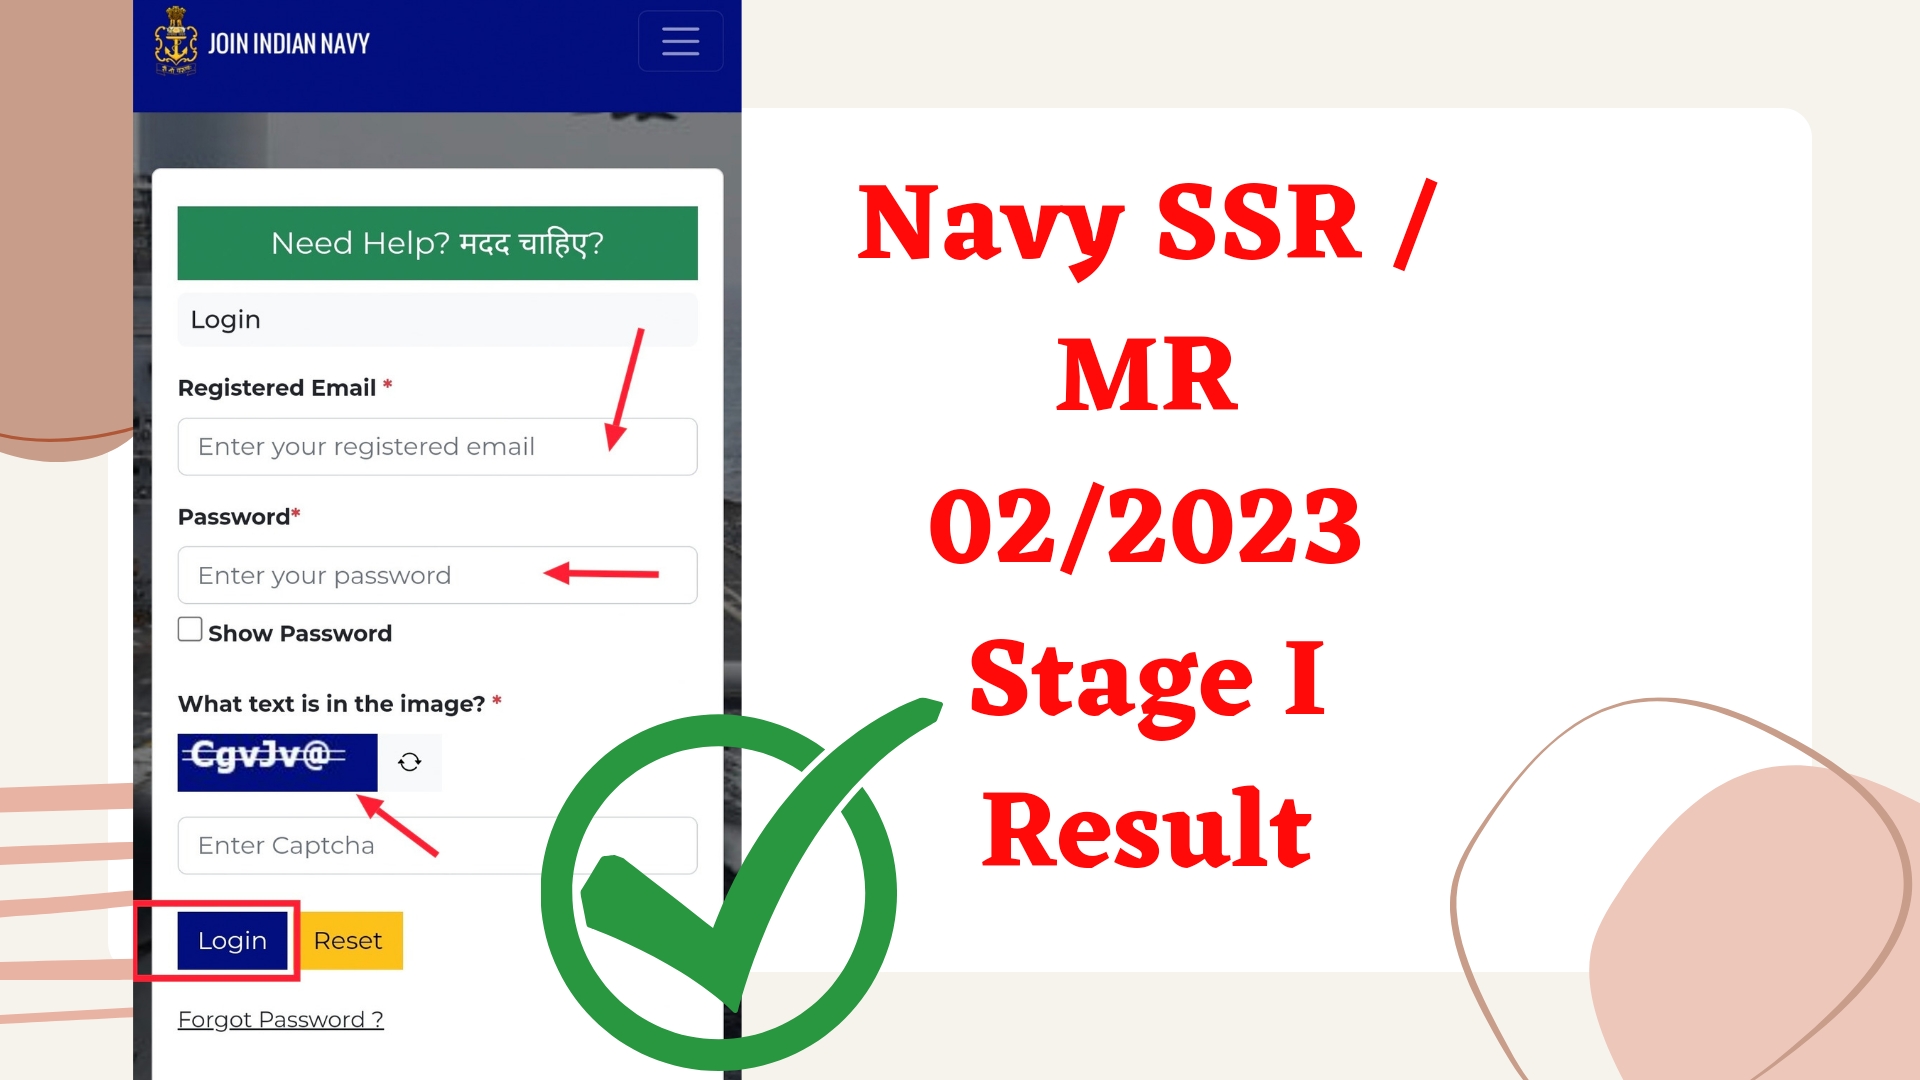 Navy SSR / MR 02/2023 Stage I Result